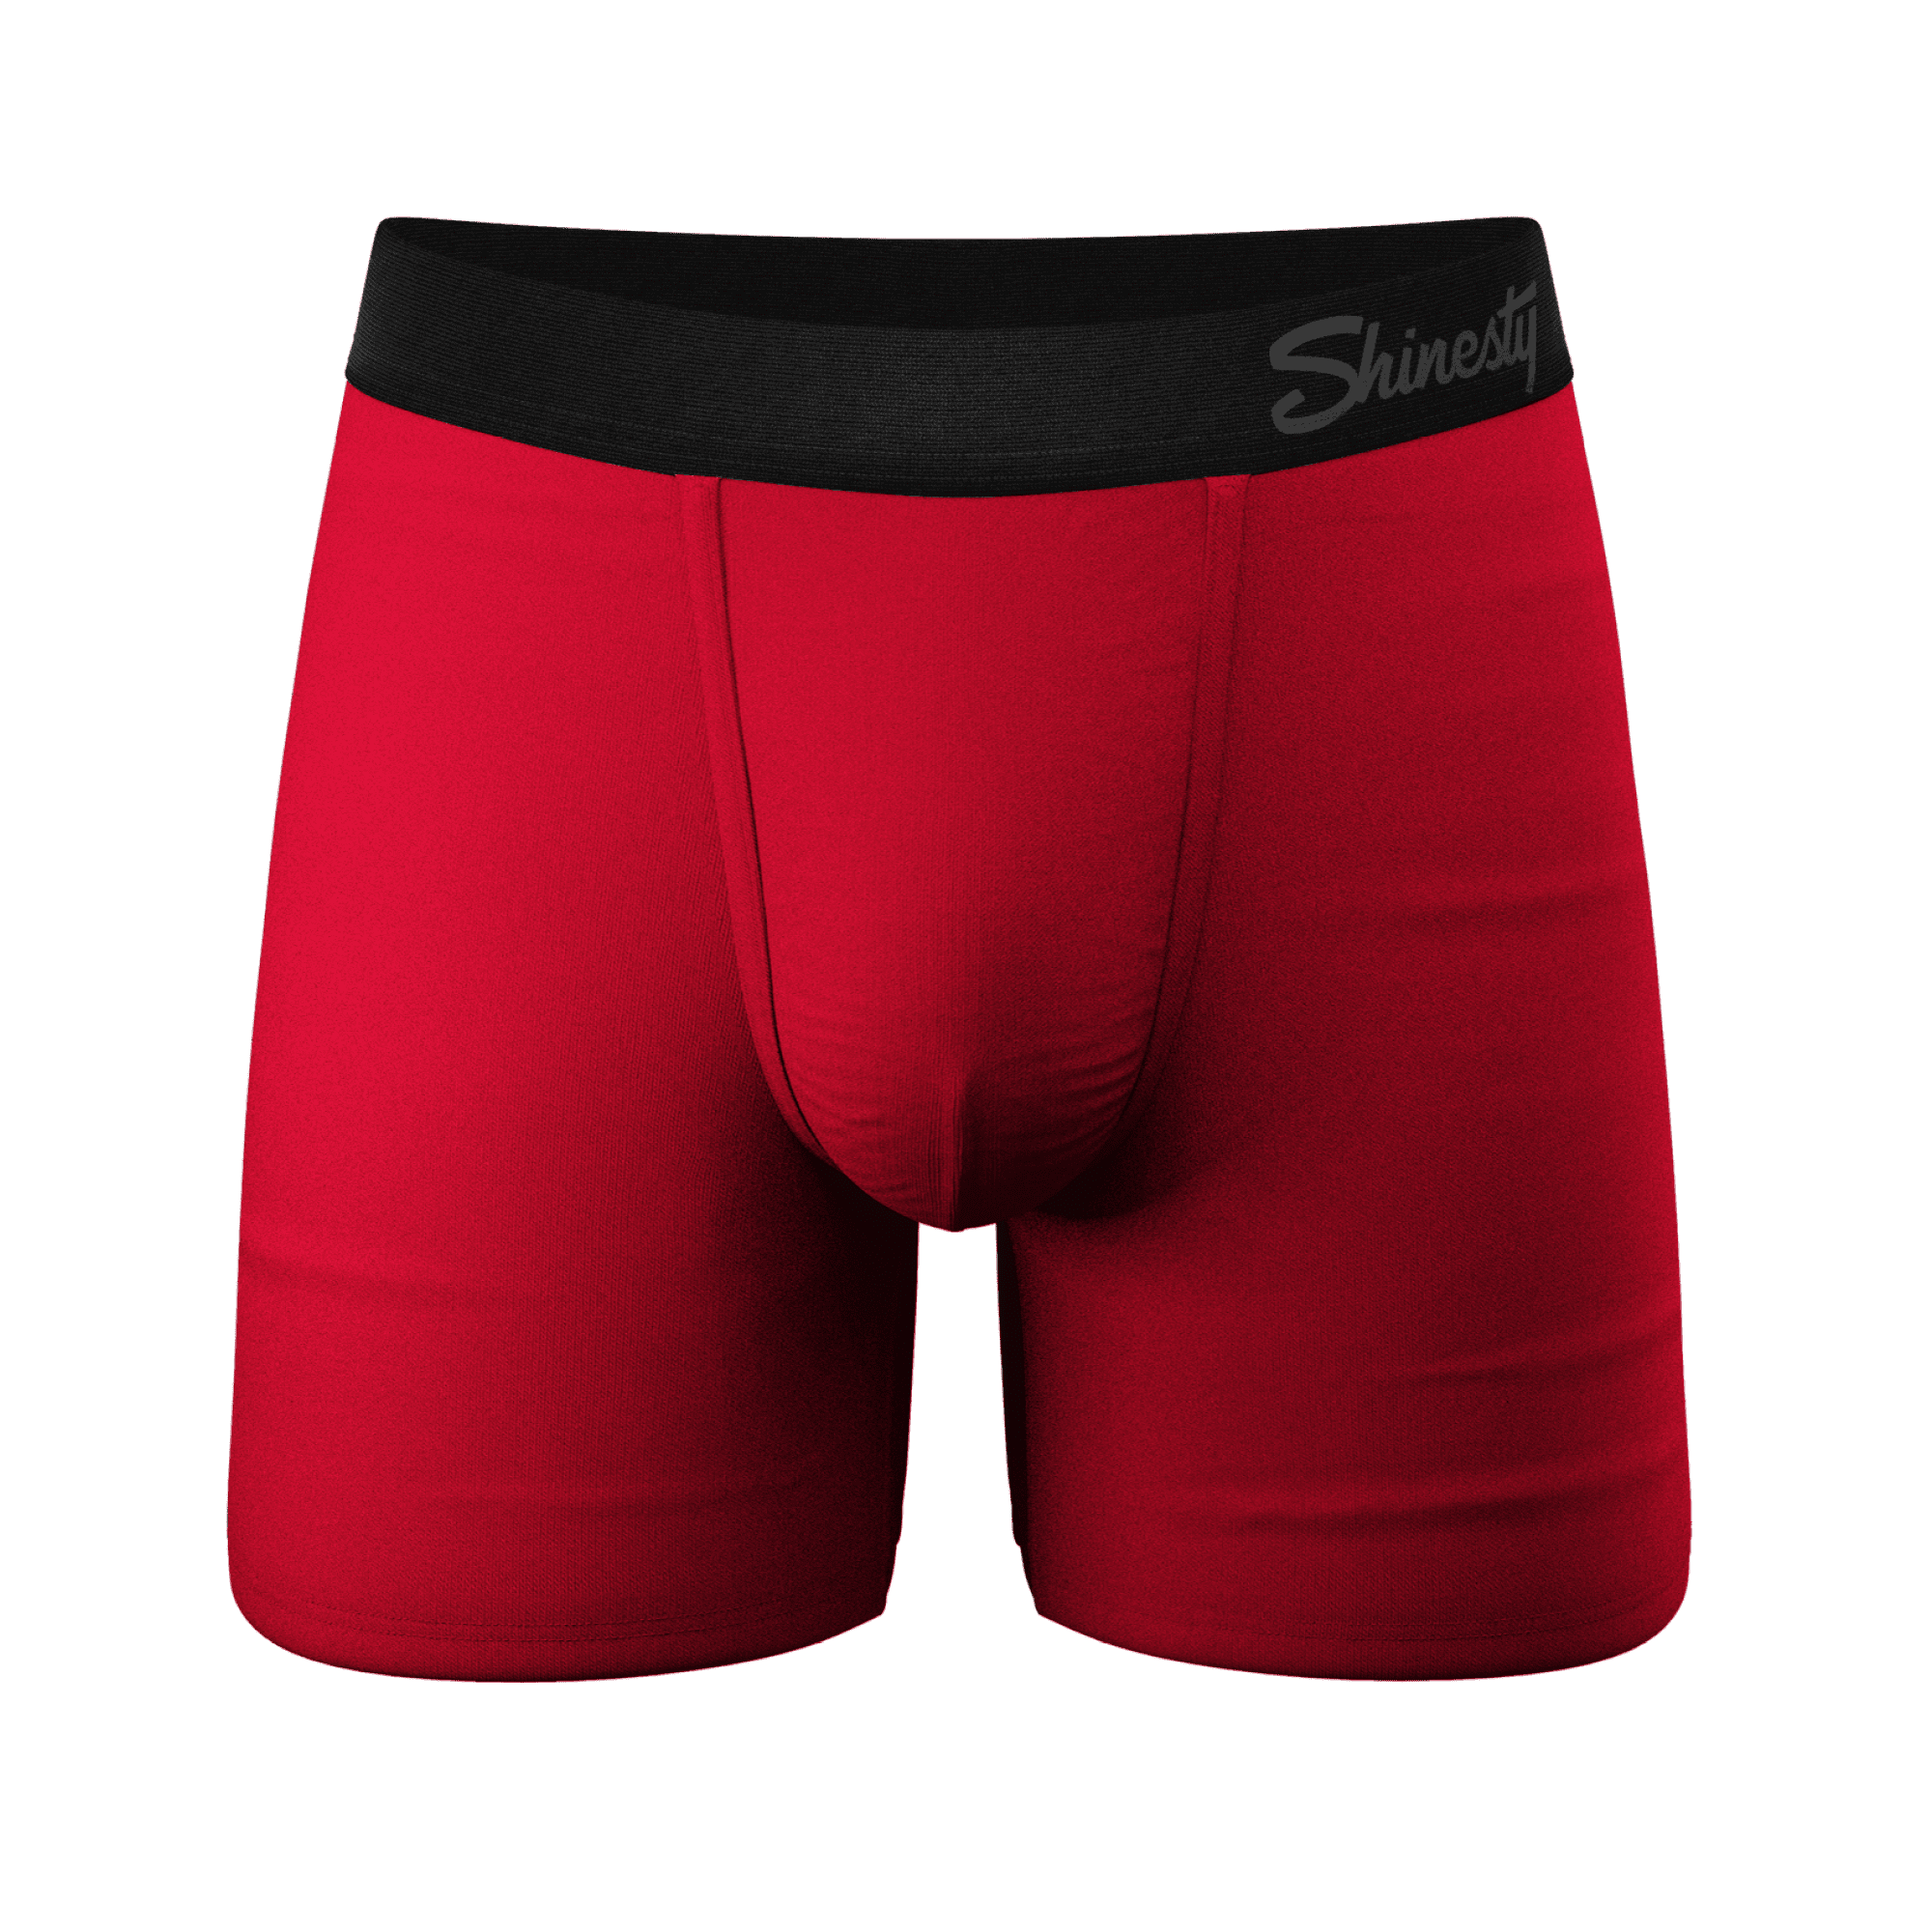 The Red Dress Effect - Shinesty Red Ball Hammock Pouch Underwear XL